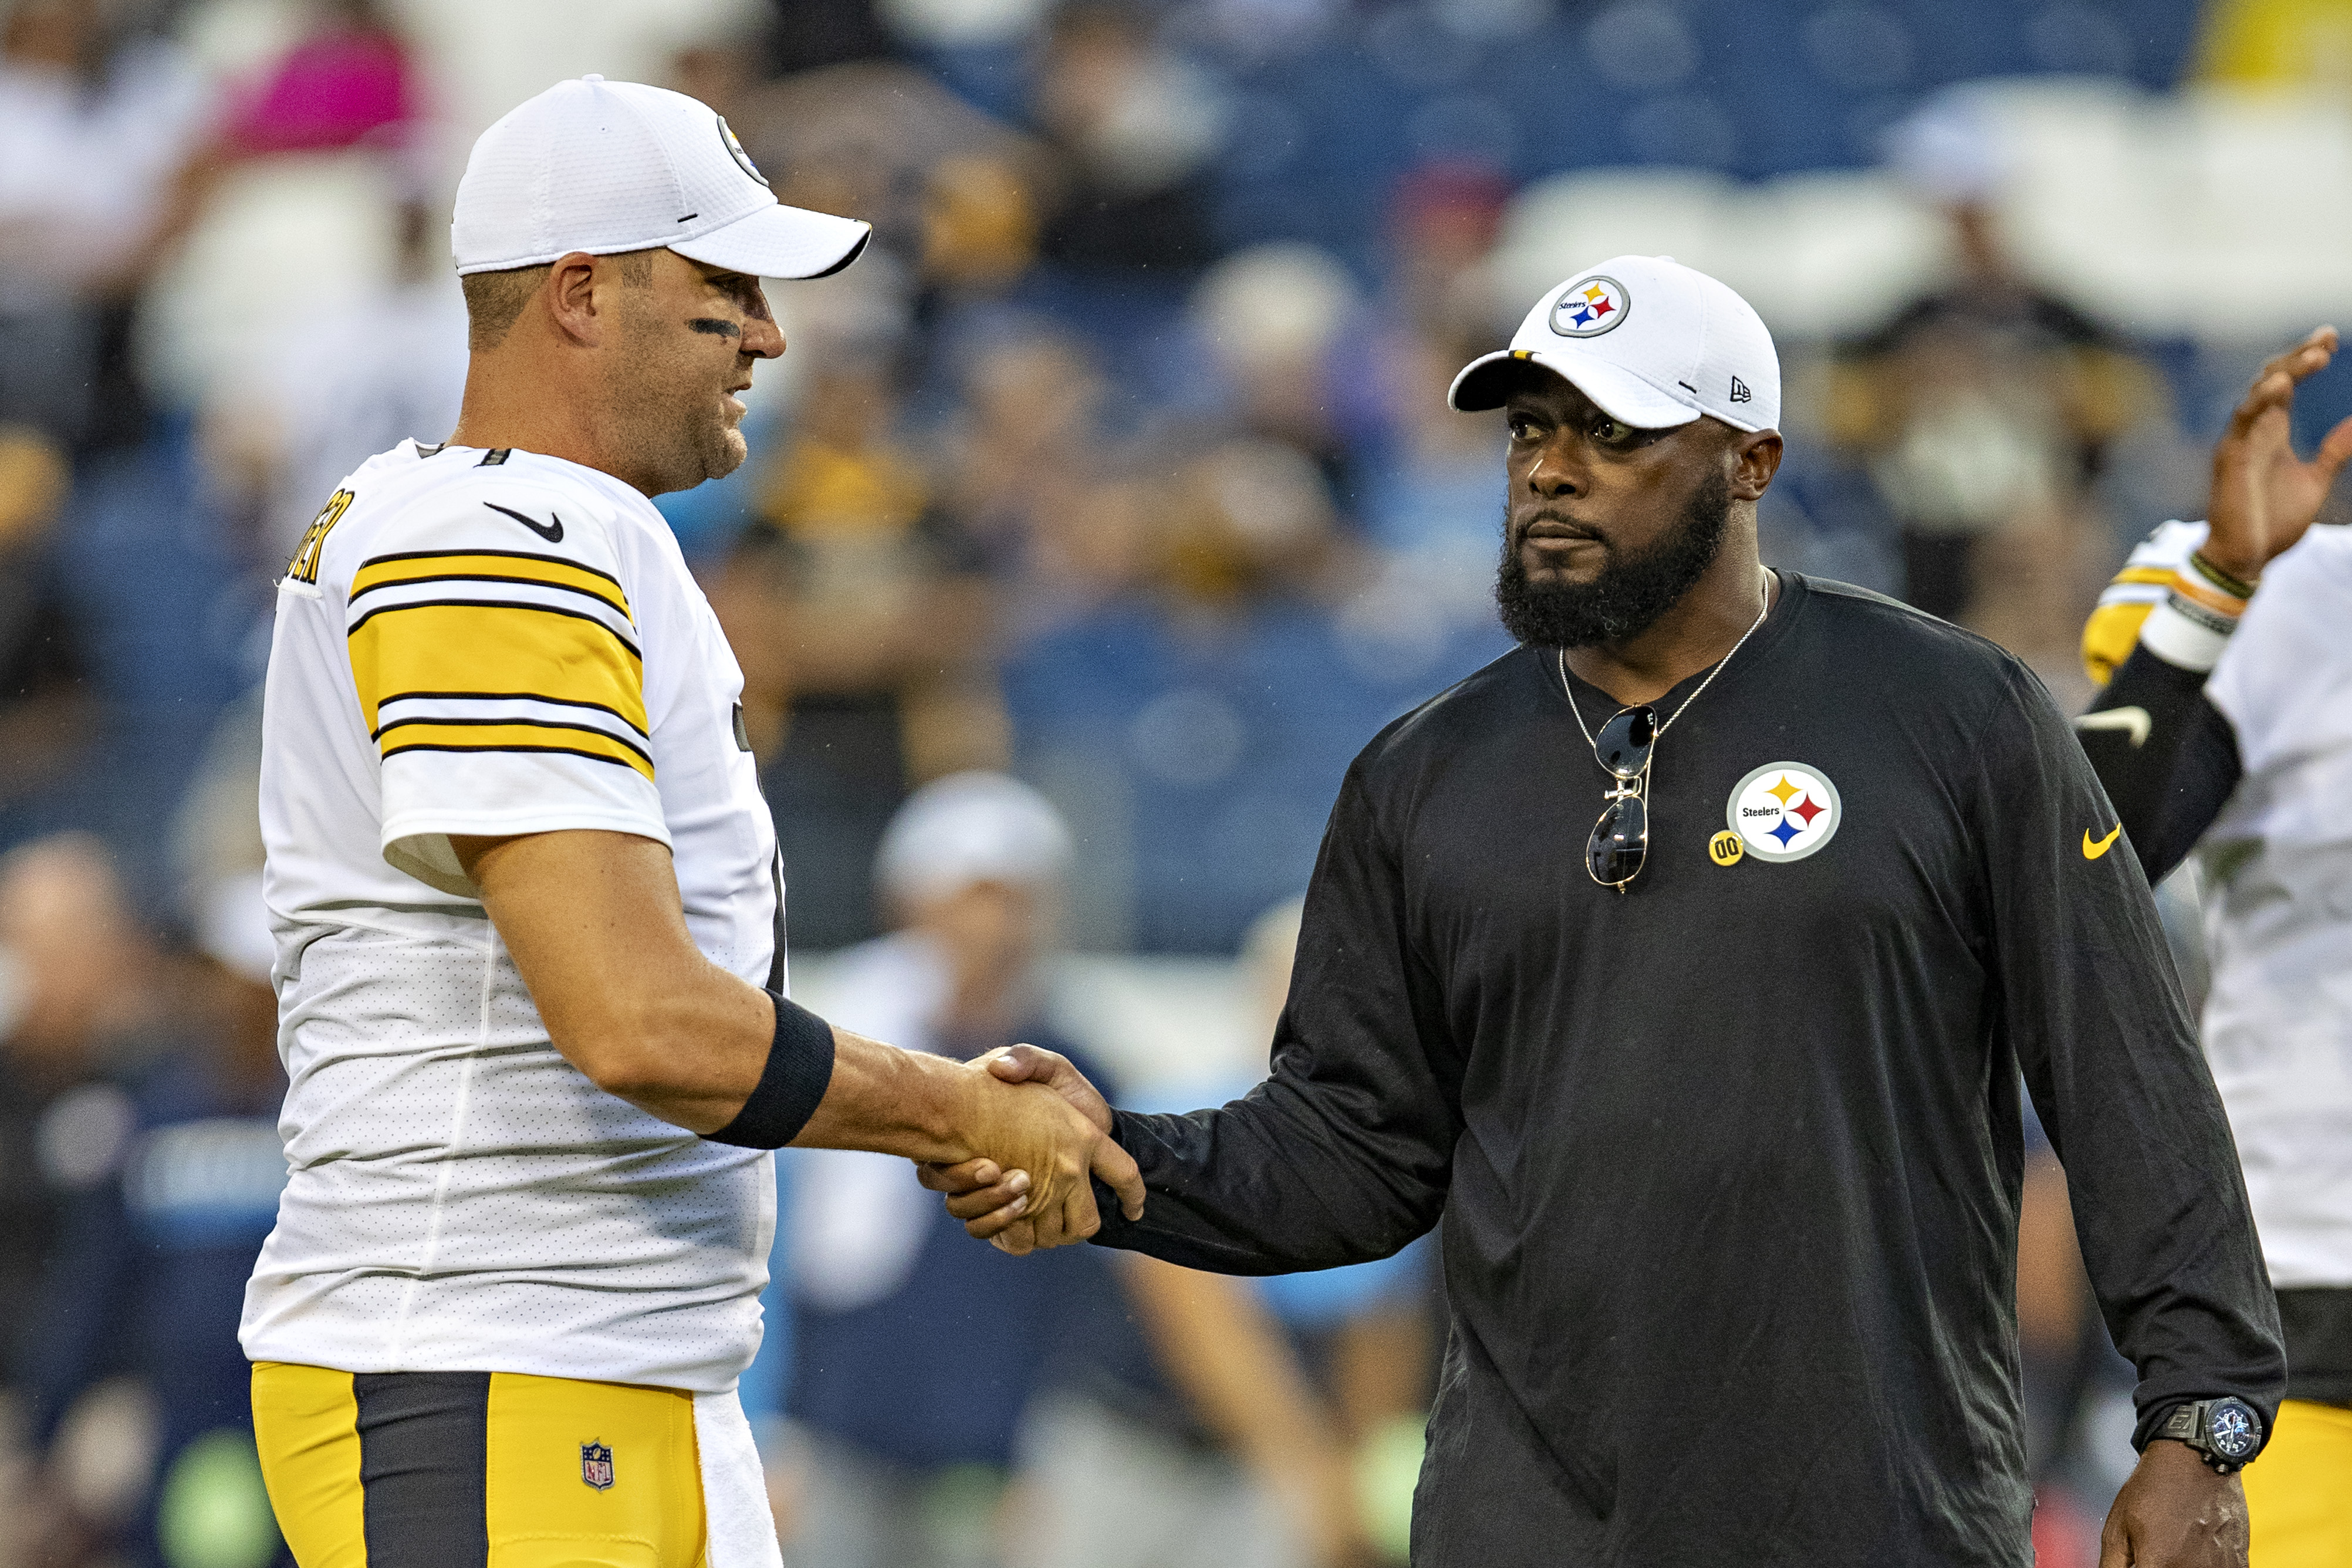 Steelers' Ben Roethlisberger: 'Not Really My Job' to Handle Chase Claypool's Behavior